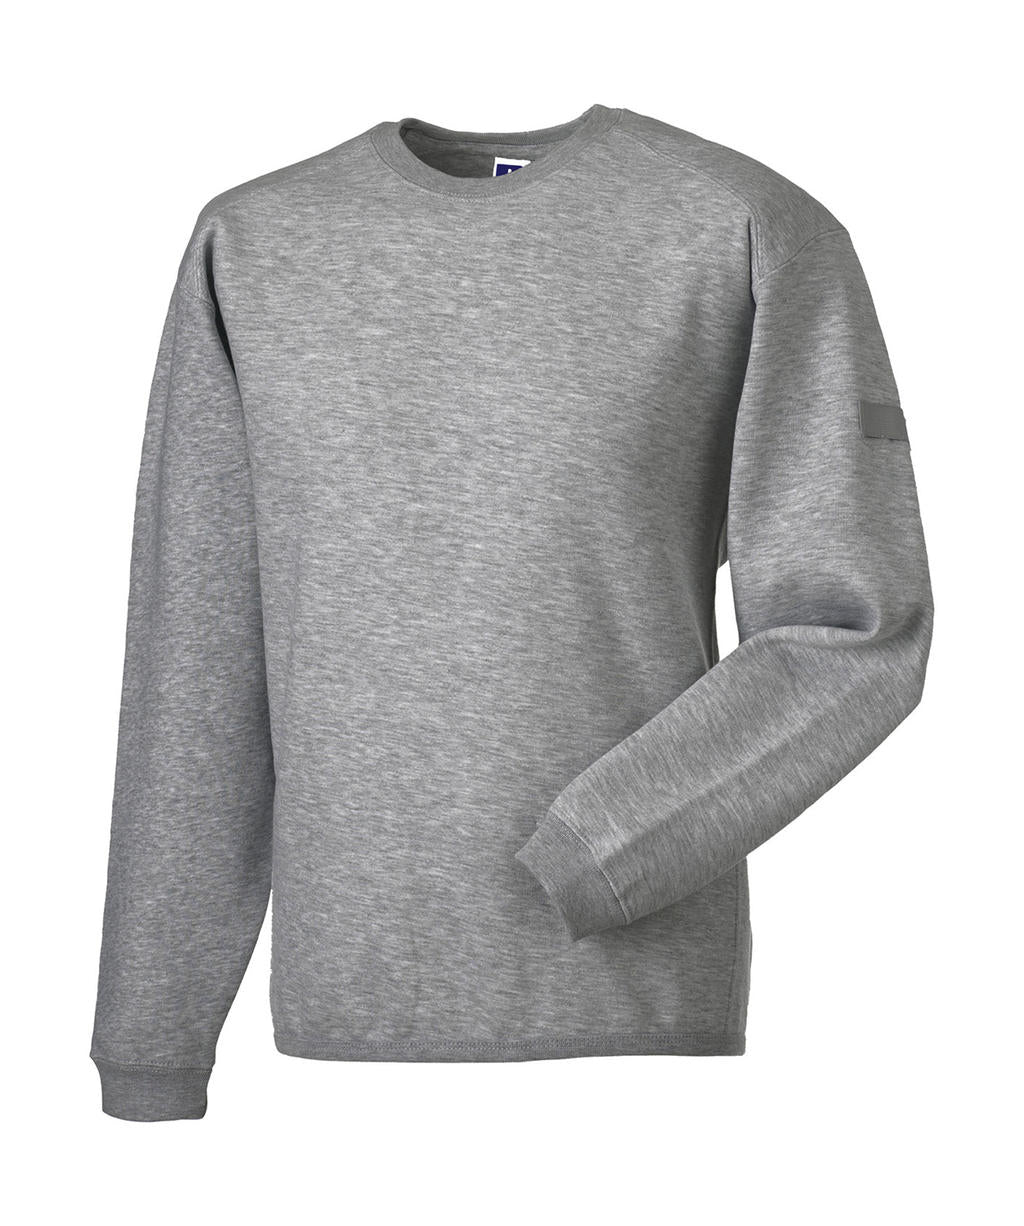 Russel Herren Workwear Pulli Pullover Sweatshirt Sweater langarm